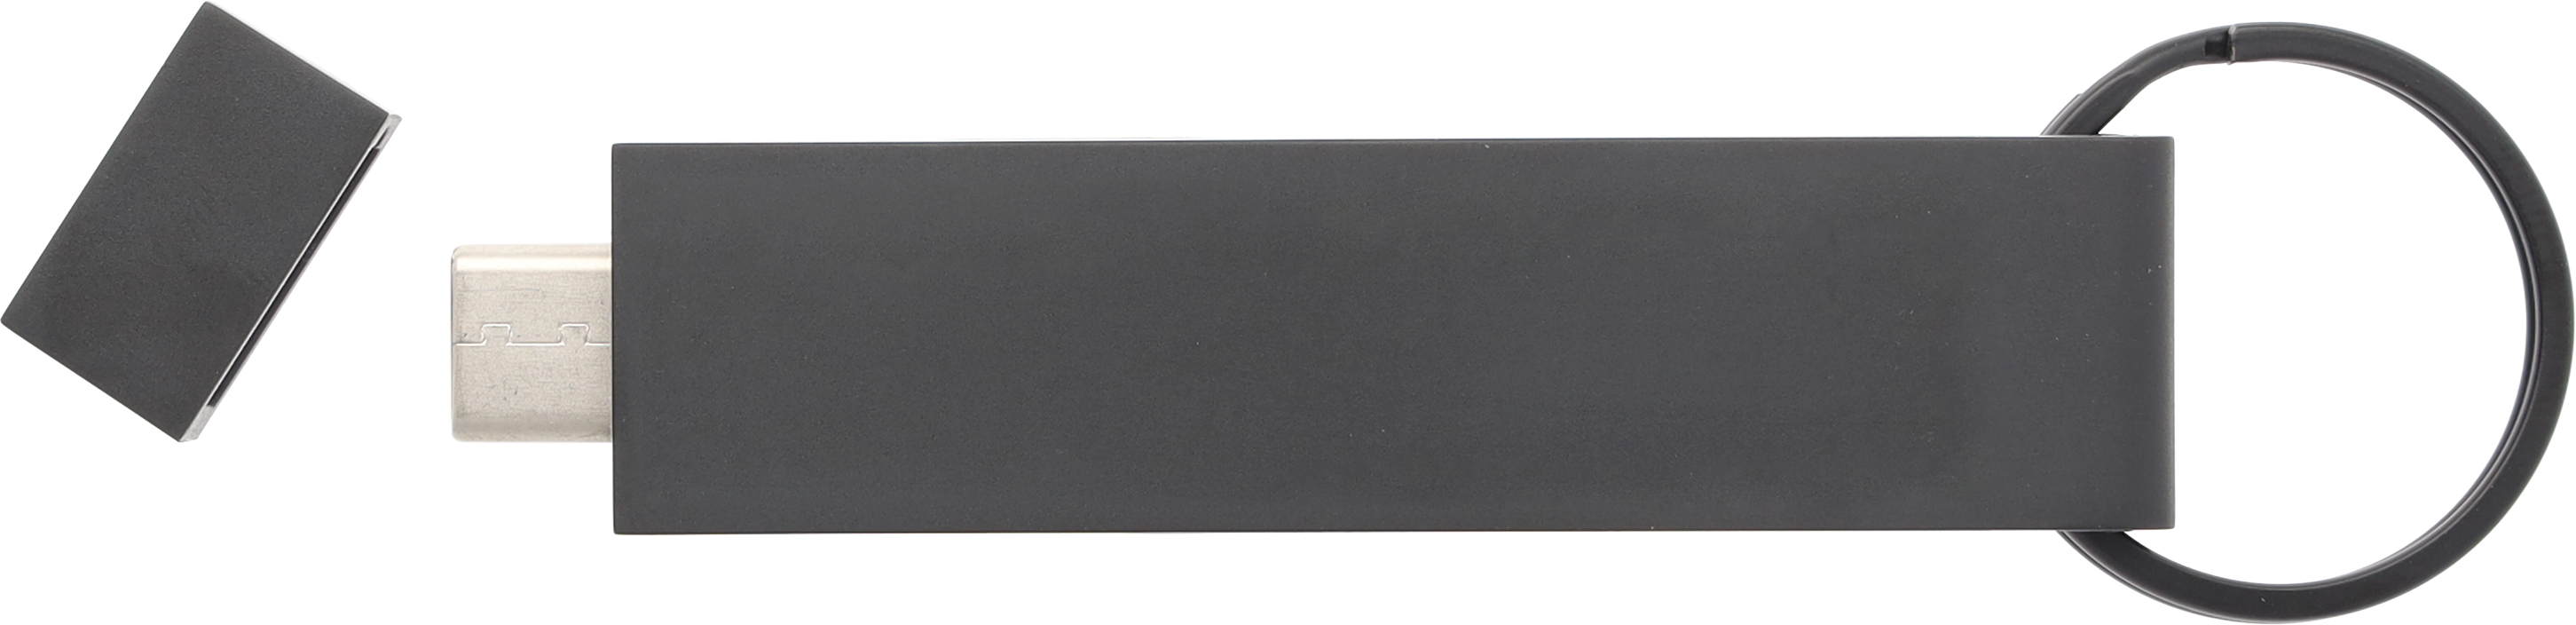 USB Stick AMG, 64 GB - schwarz, Kunststoff